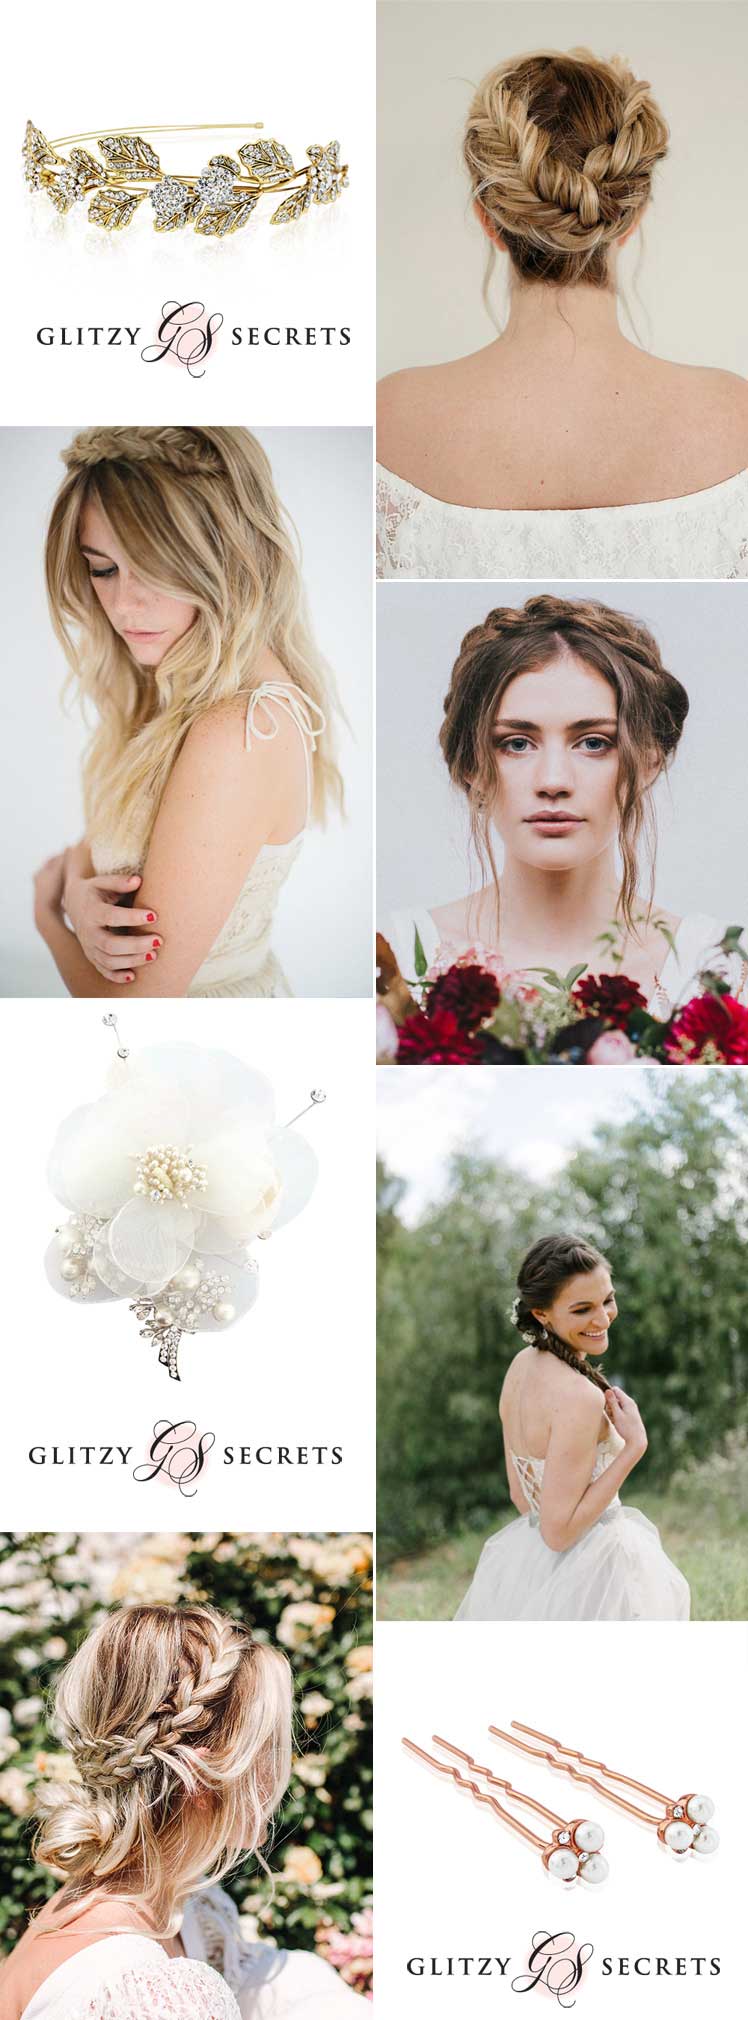 Bridal headpiece ideas for braid hairstyles